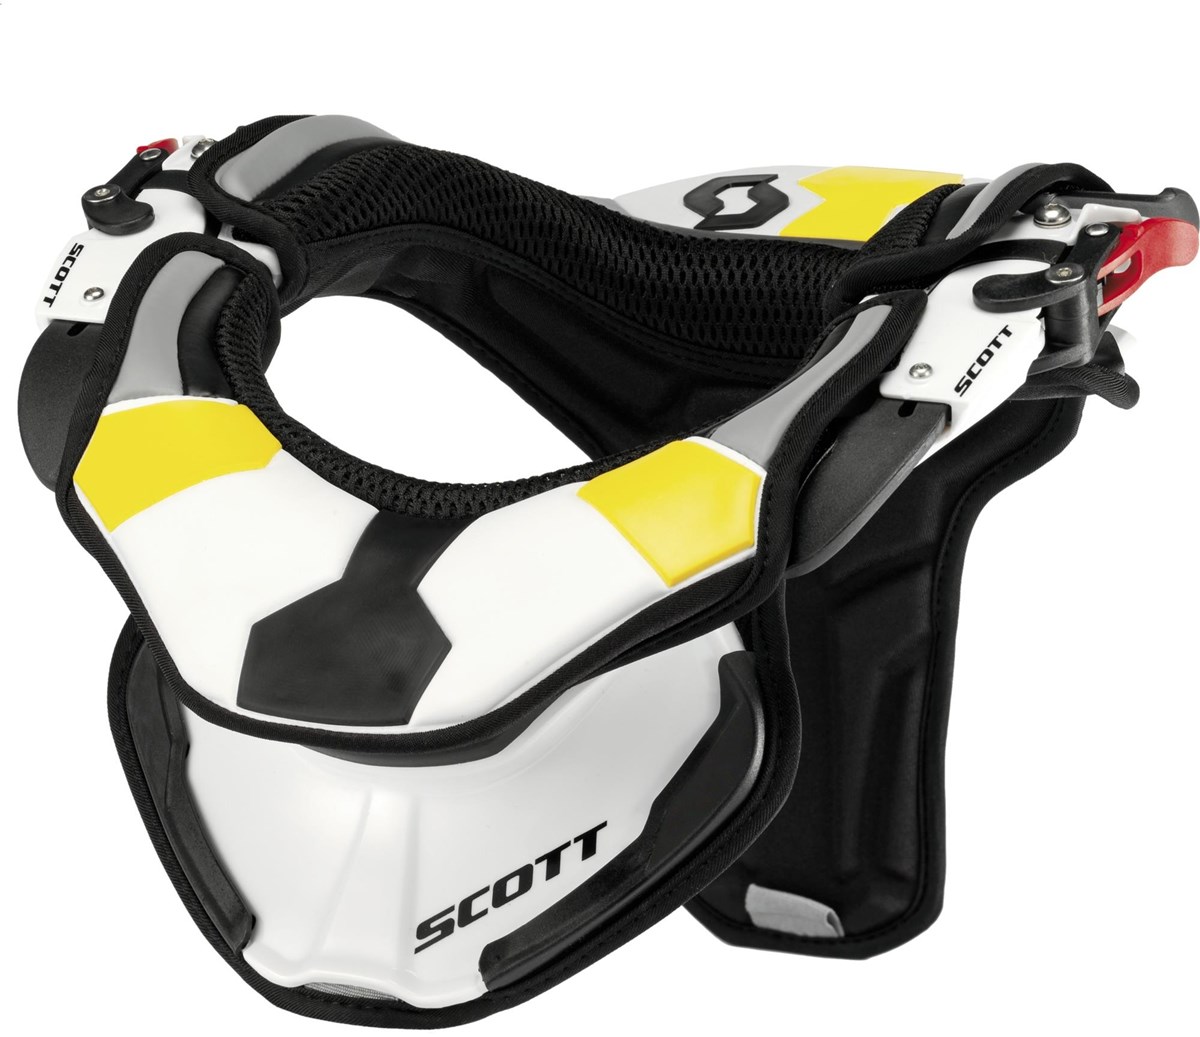 Scott Bike Neck Brace product image